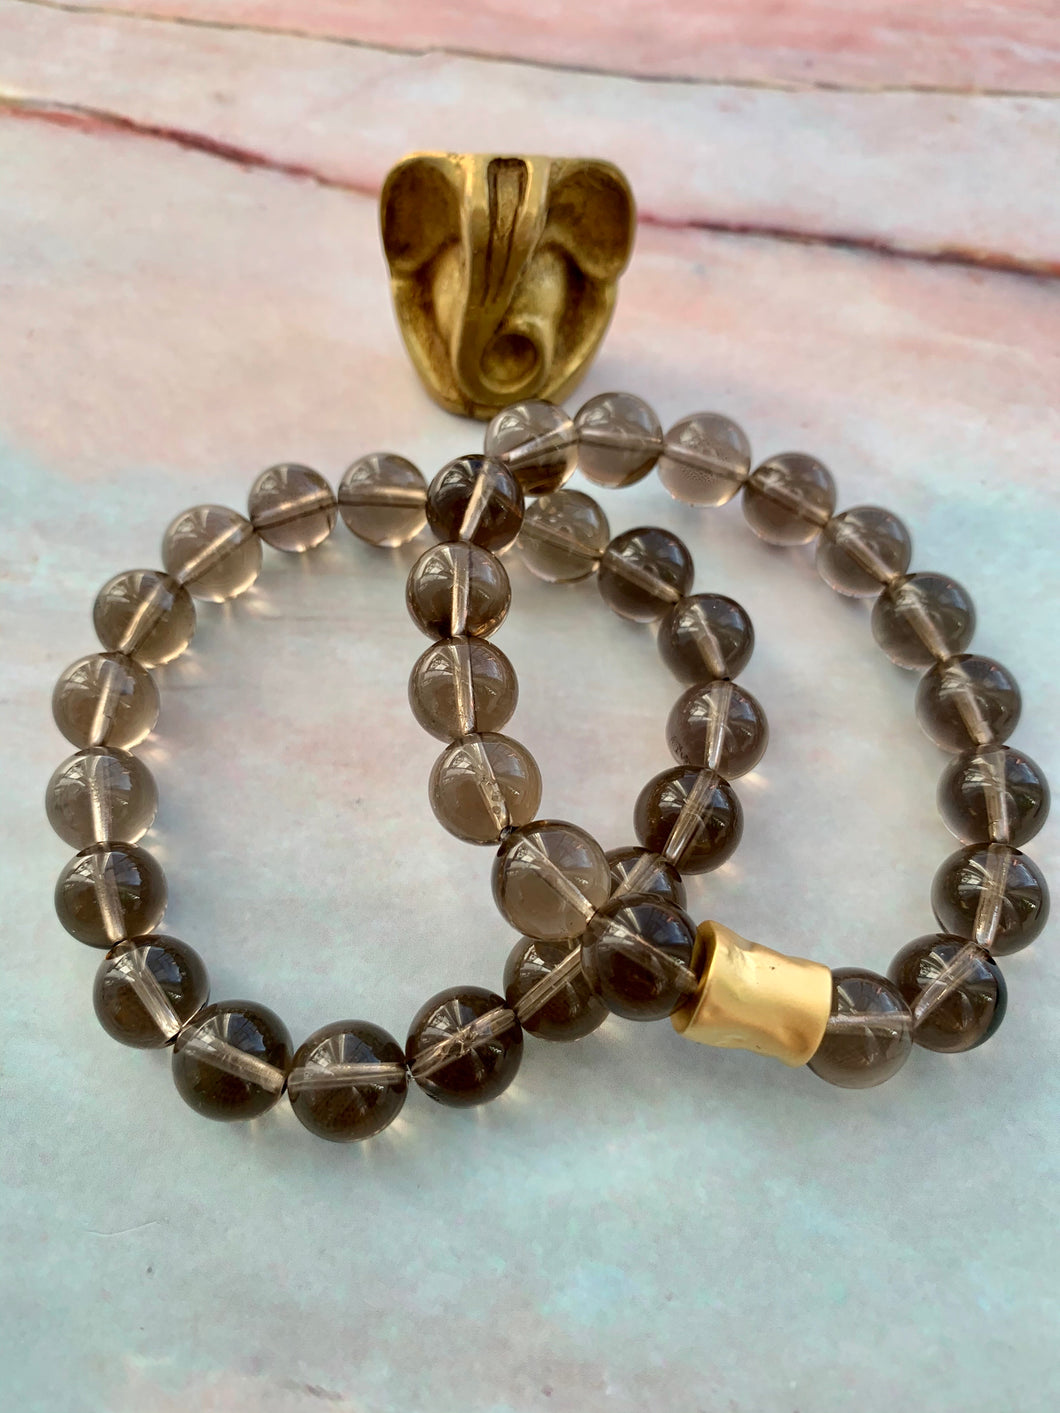 Smoky Quartz Healing Crystals Bracelet